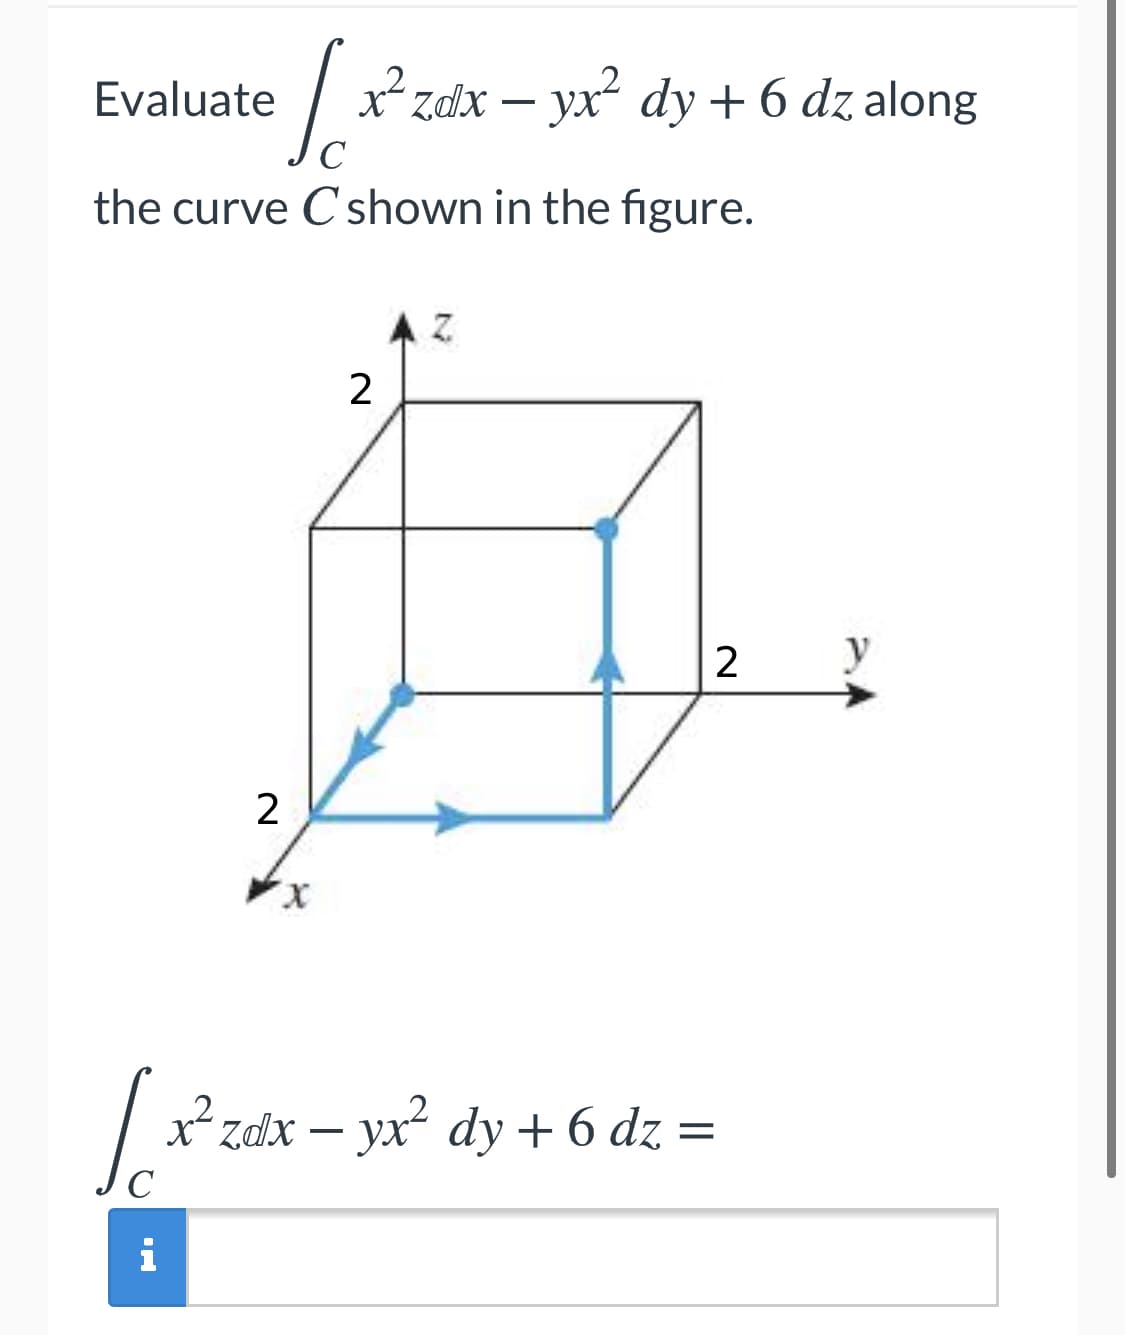 Evaluate
x*zdx – yx dy + 6 dz along
C
the curve C shown in the figure.
A Z
2
2
y
2
xʻzdx – yx dy + 6 dz =
